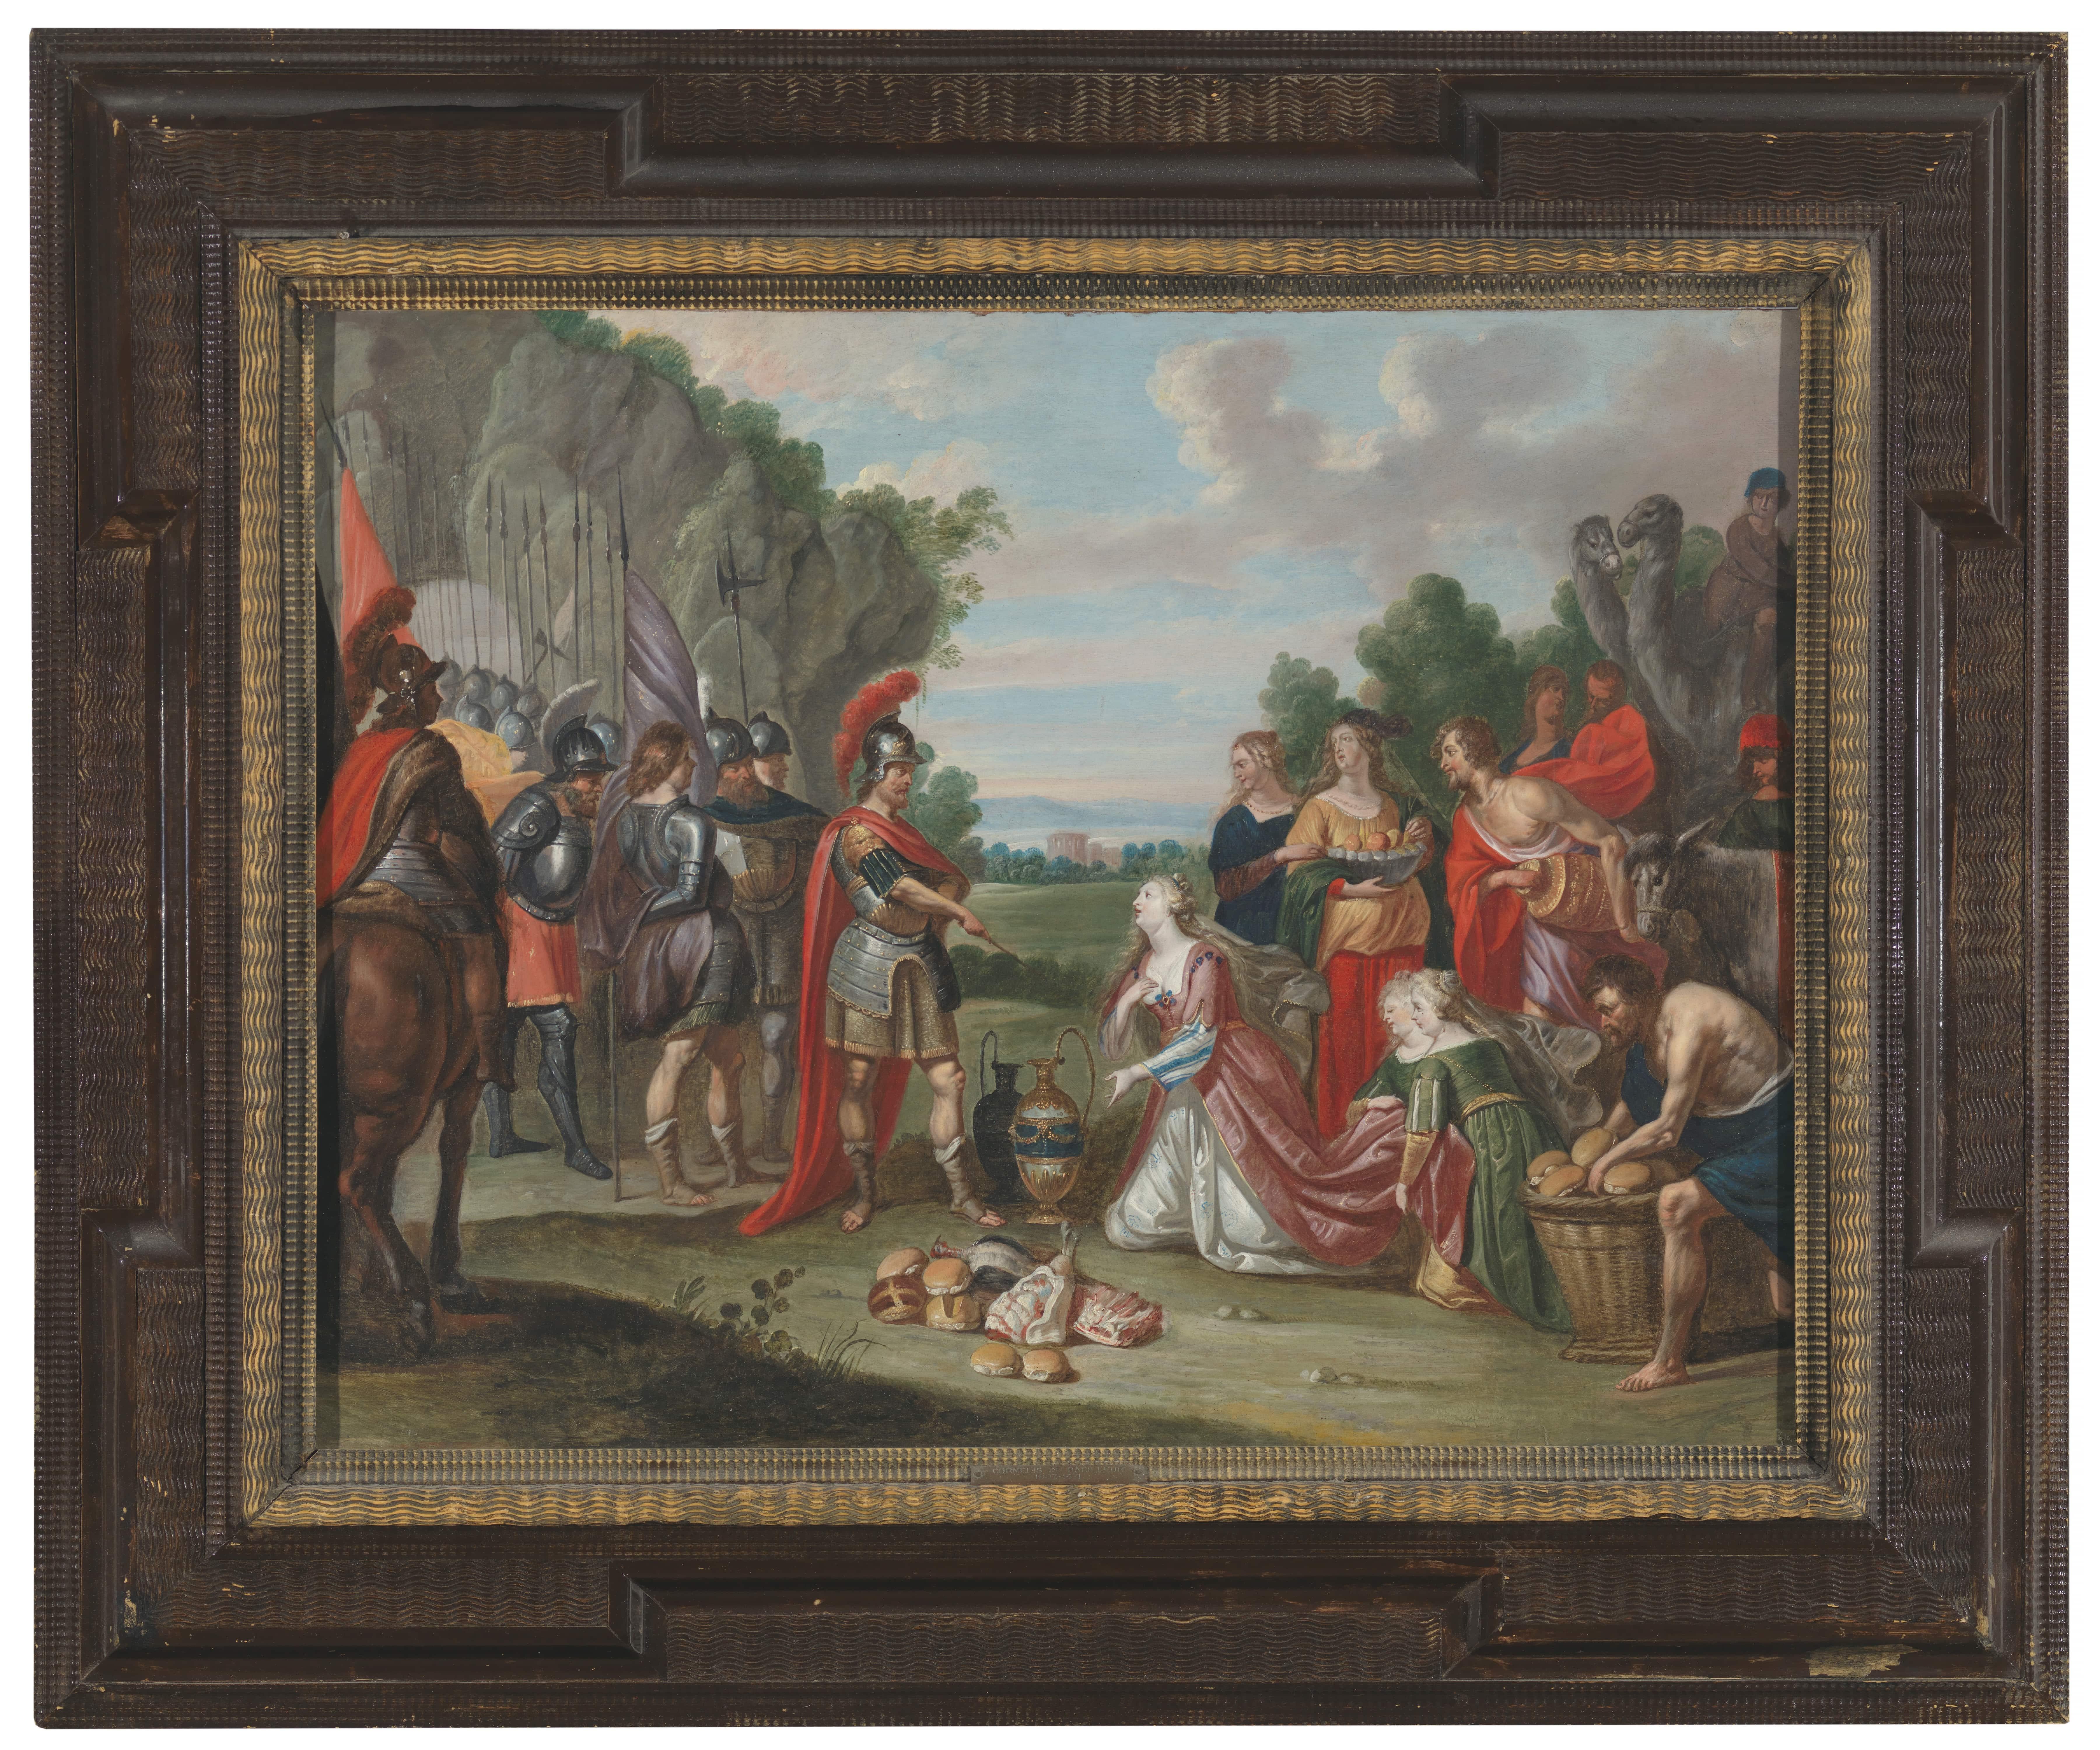 Simon Floquet  Landscape Painting - 17th C, Baroque, Biblical, David and Abigail, Oil on Copper 